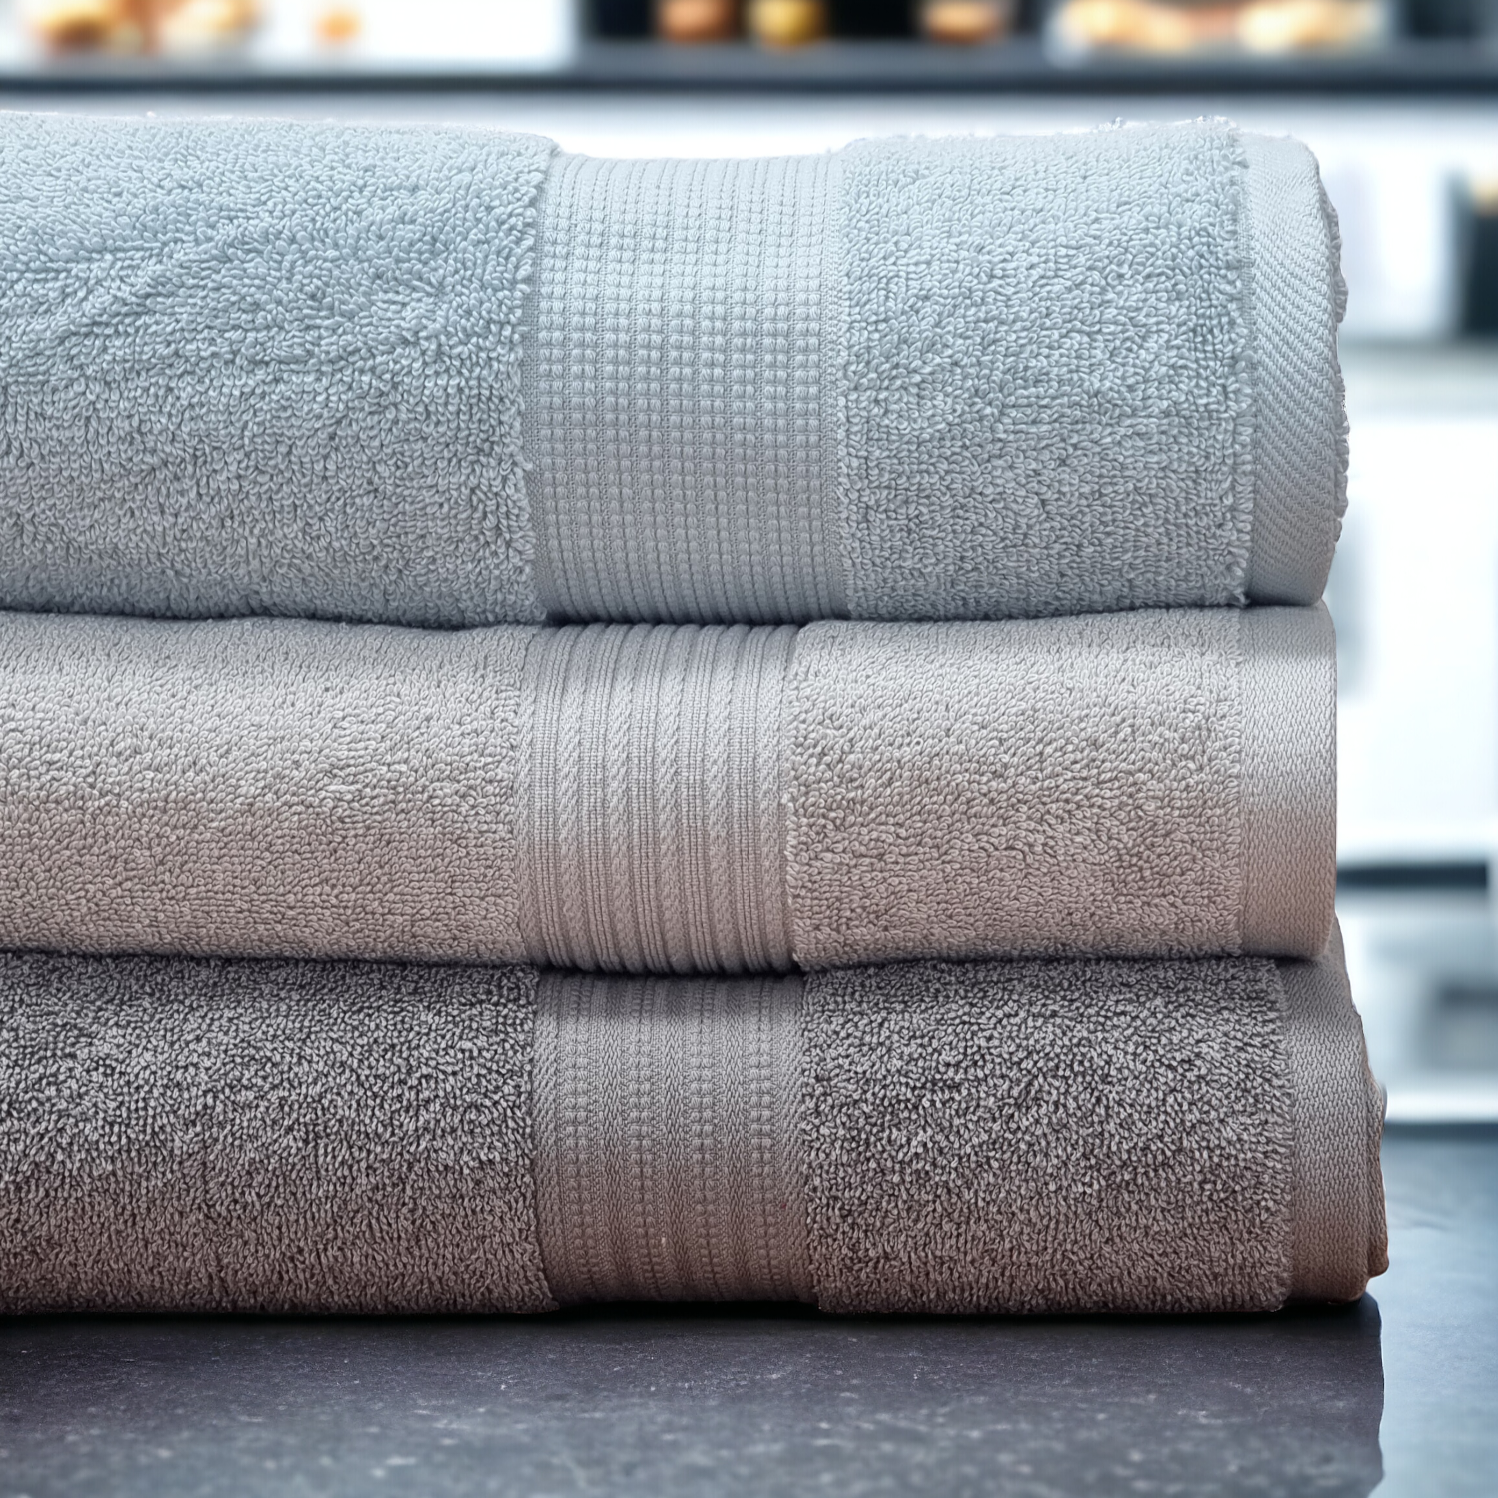 Dubai Luxury Bath Towels